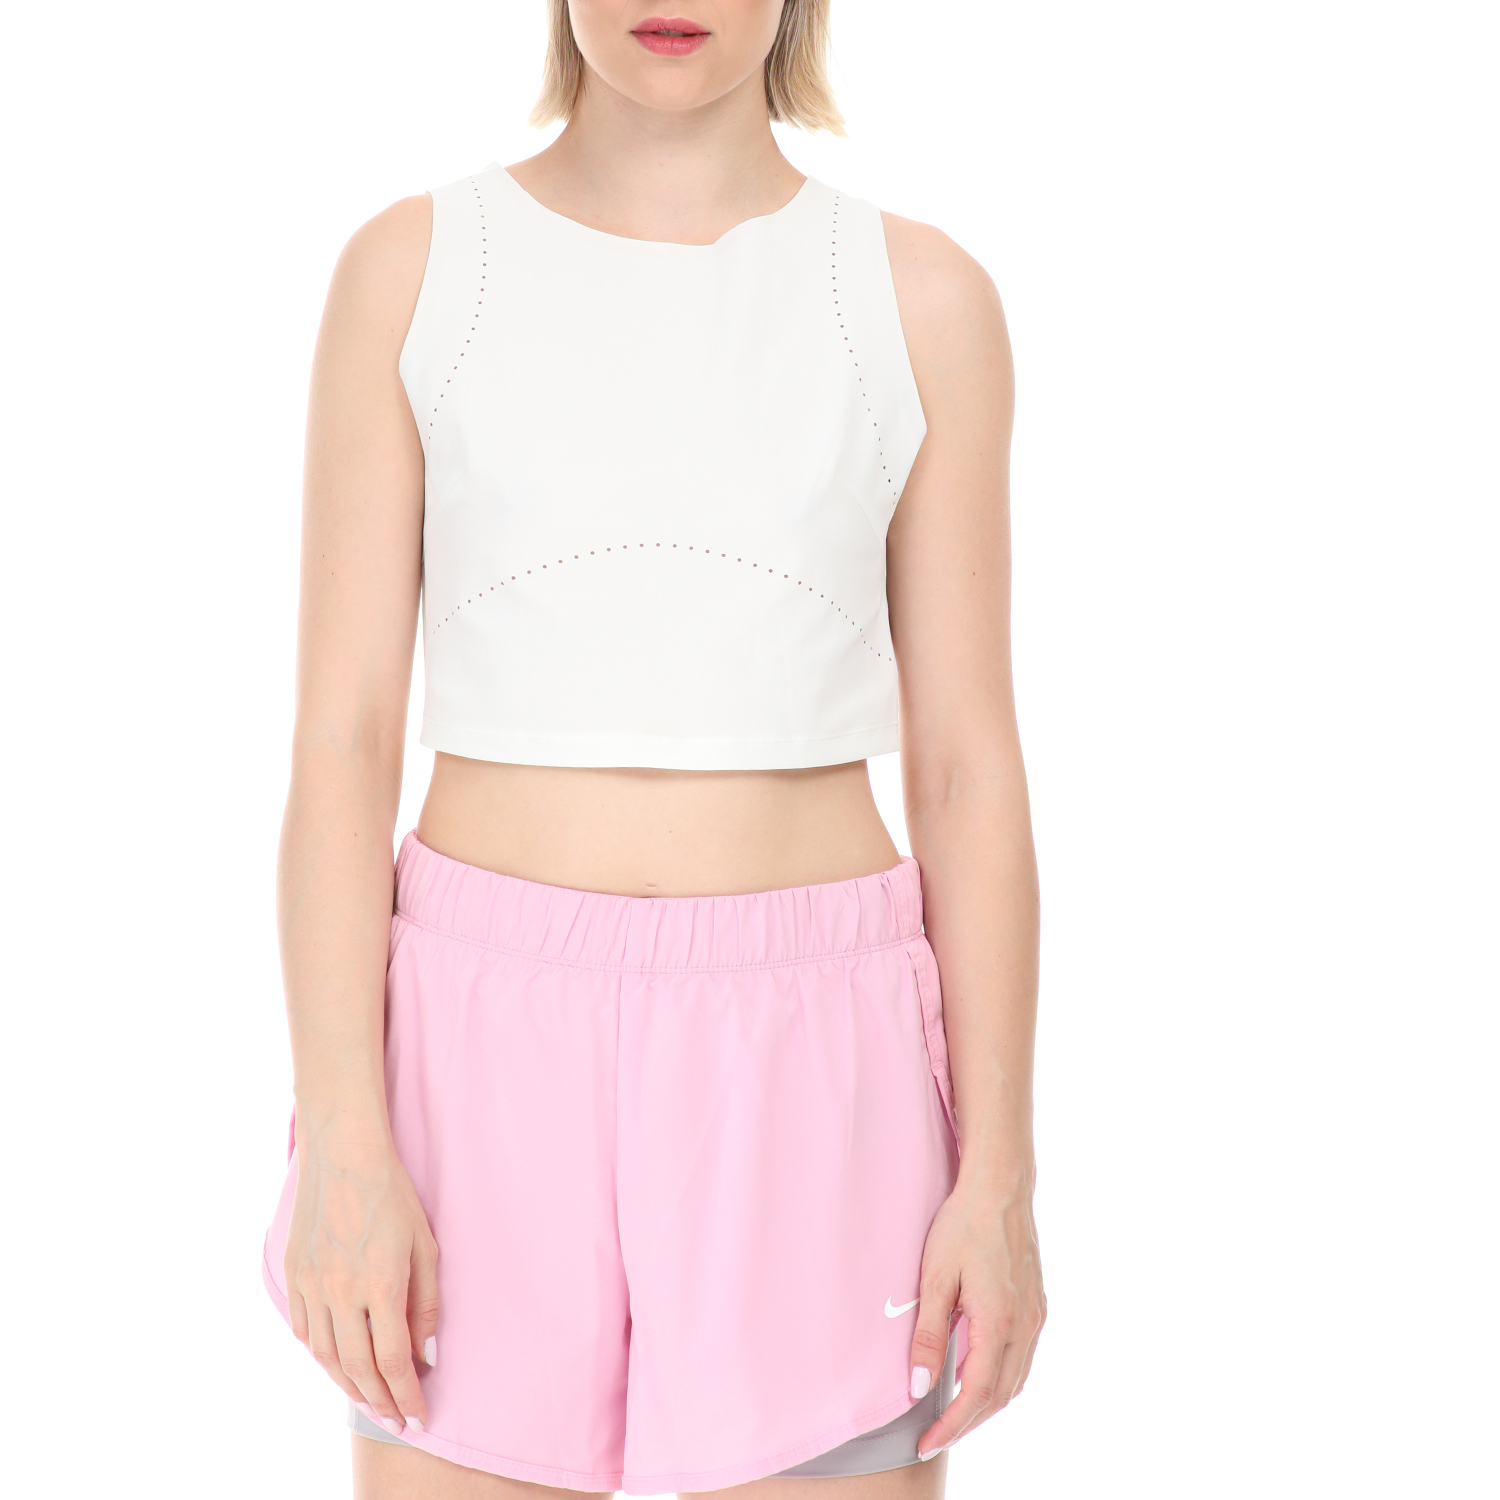 NIKE - Γυναικείο cropped top Nike Training Tank λευκό Γυναικεία/Ρούχα/Αθλητικά/T-shirt-Τοπ